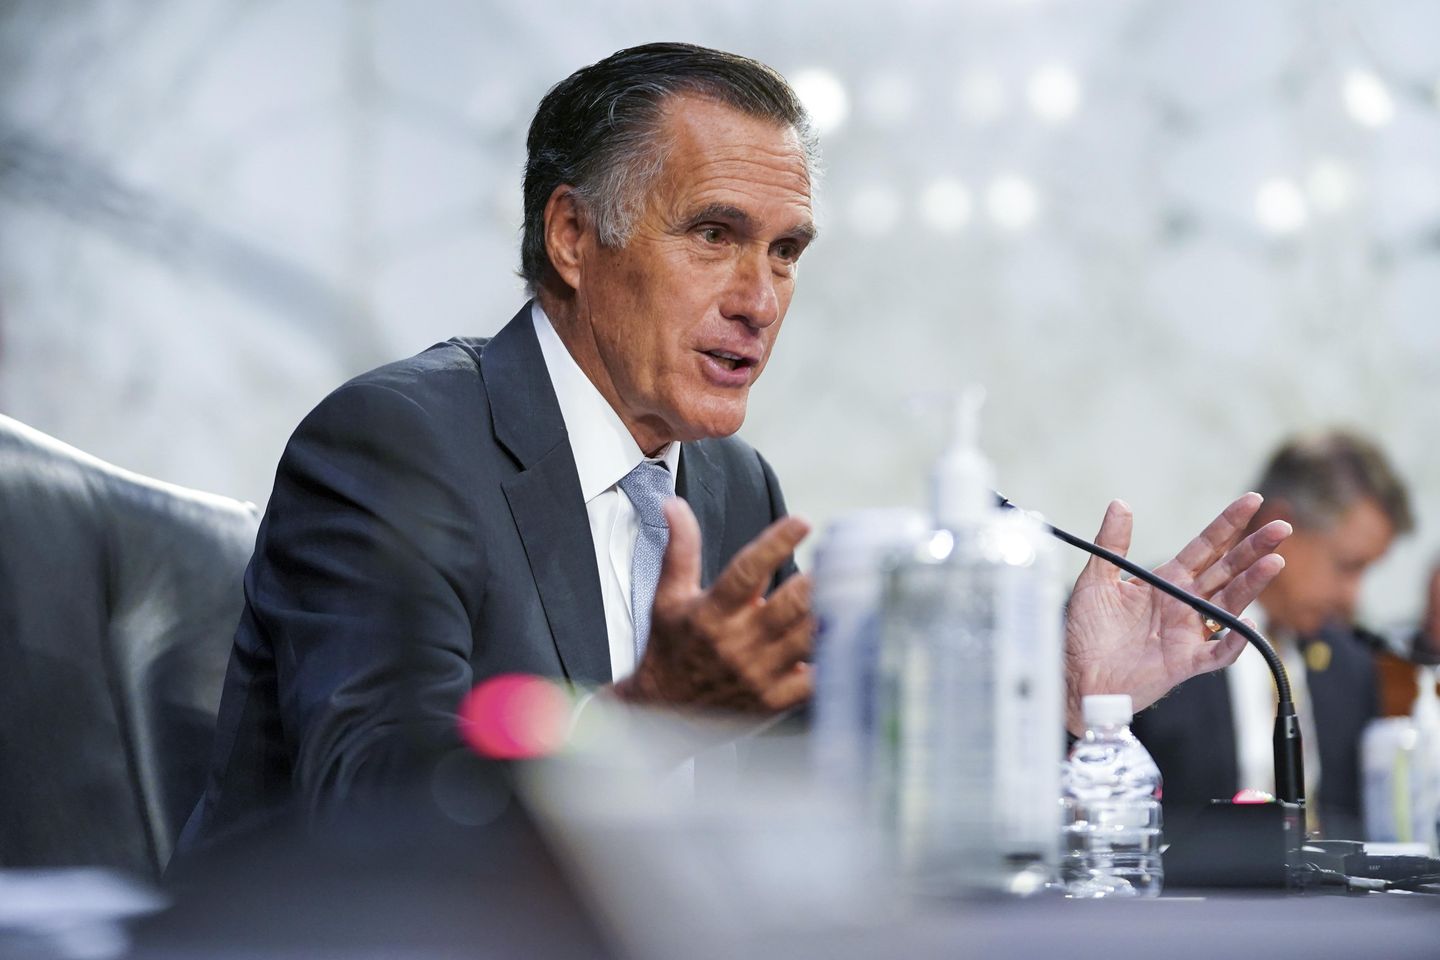 Sen. Mitt Romney says Bidens had a bad year and needs a reset